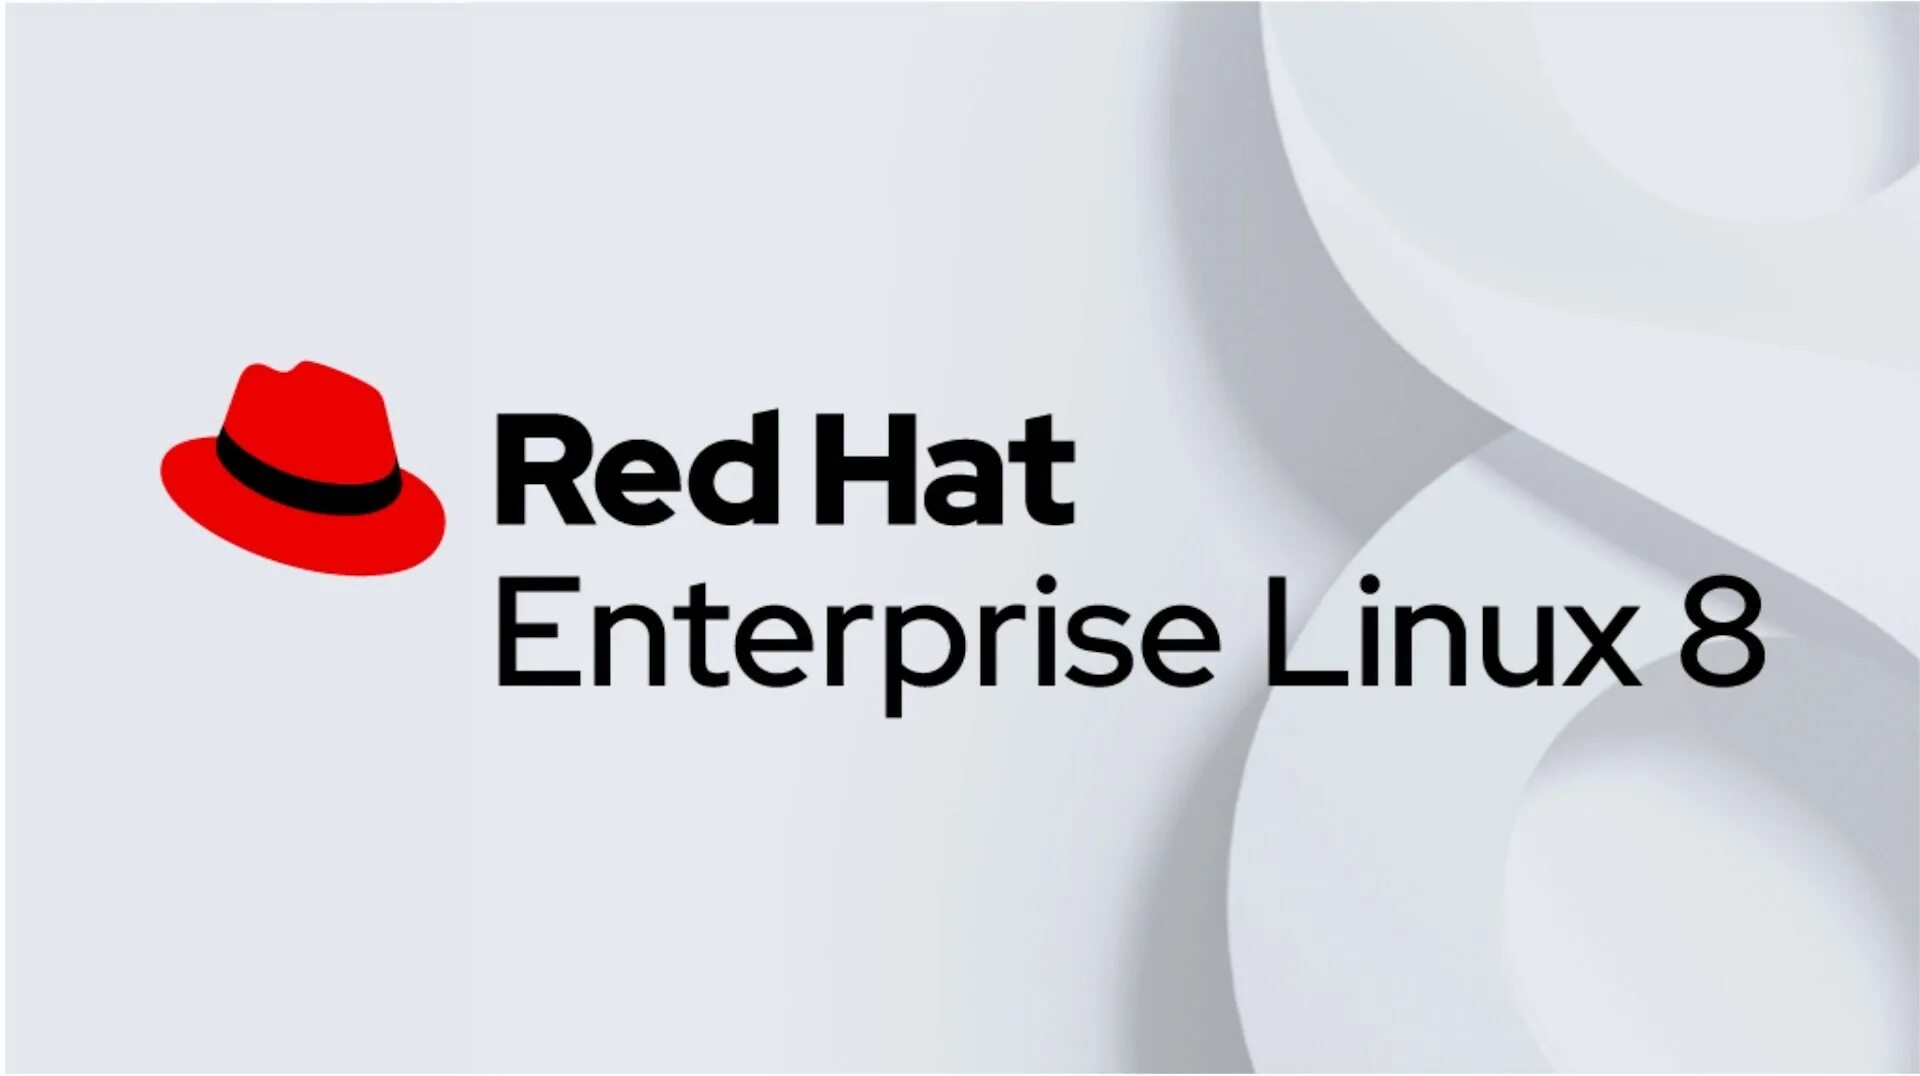 Red hat 4. Red hat Enterprise Linux. Red hat Enterprise Linux (RHEL). RHEL 8. Red hat Enterprise Linux 8.